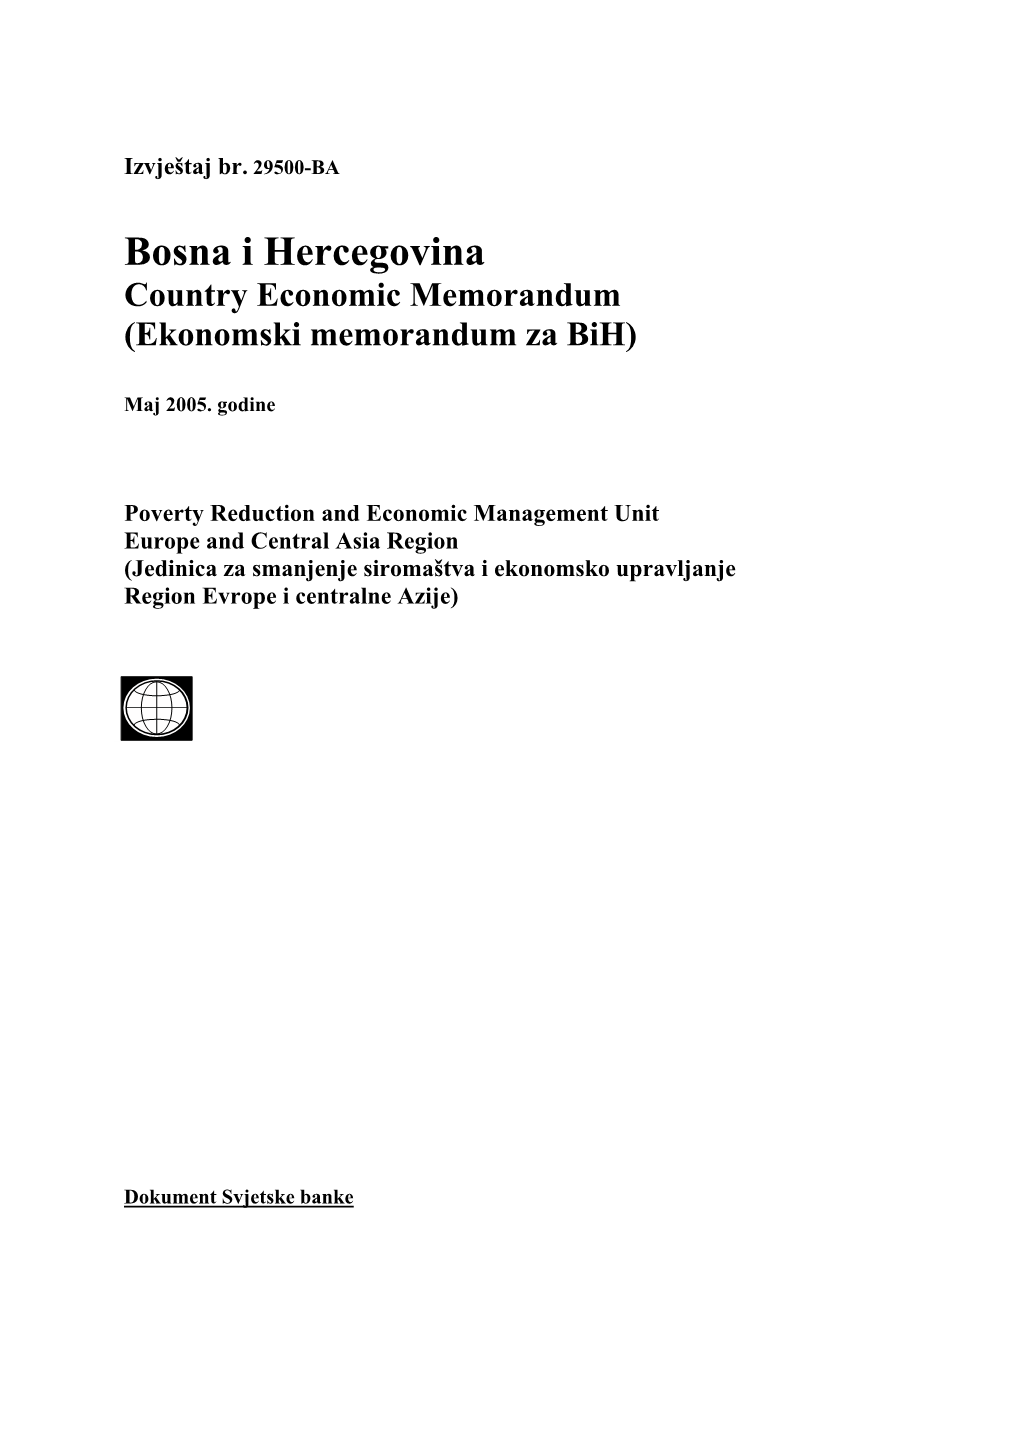 Bosna I Hercegovina Country Economic Memorandum (Ekonomski Memorandum Za Bih)